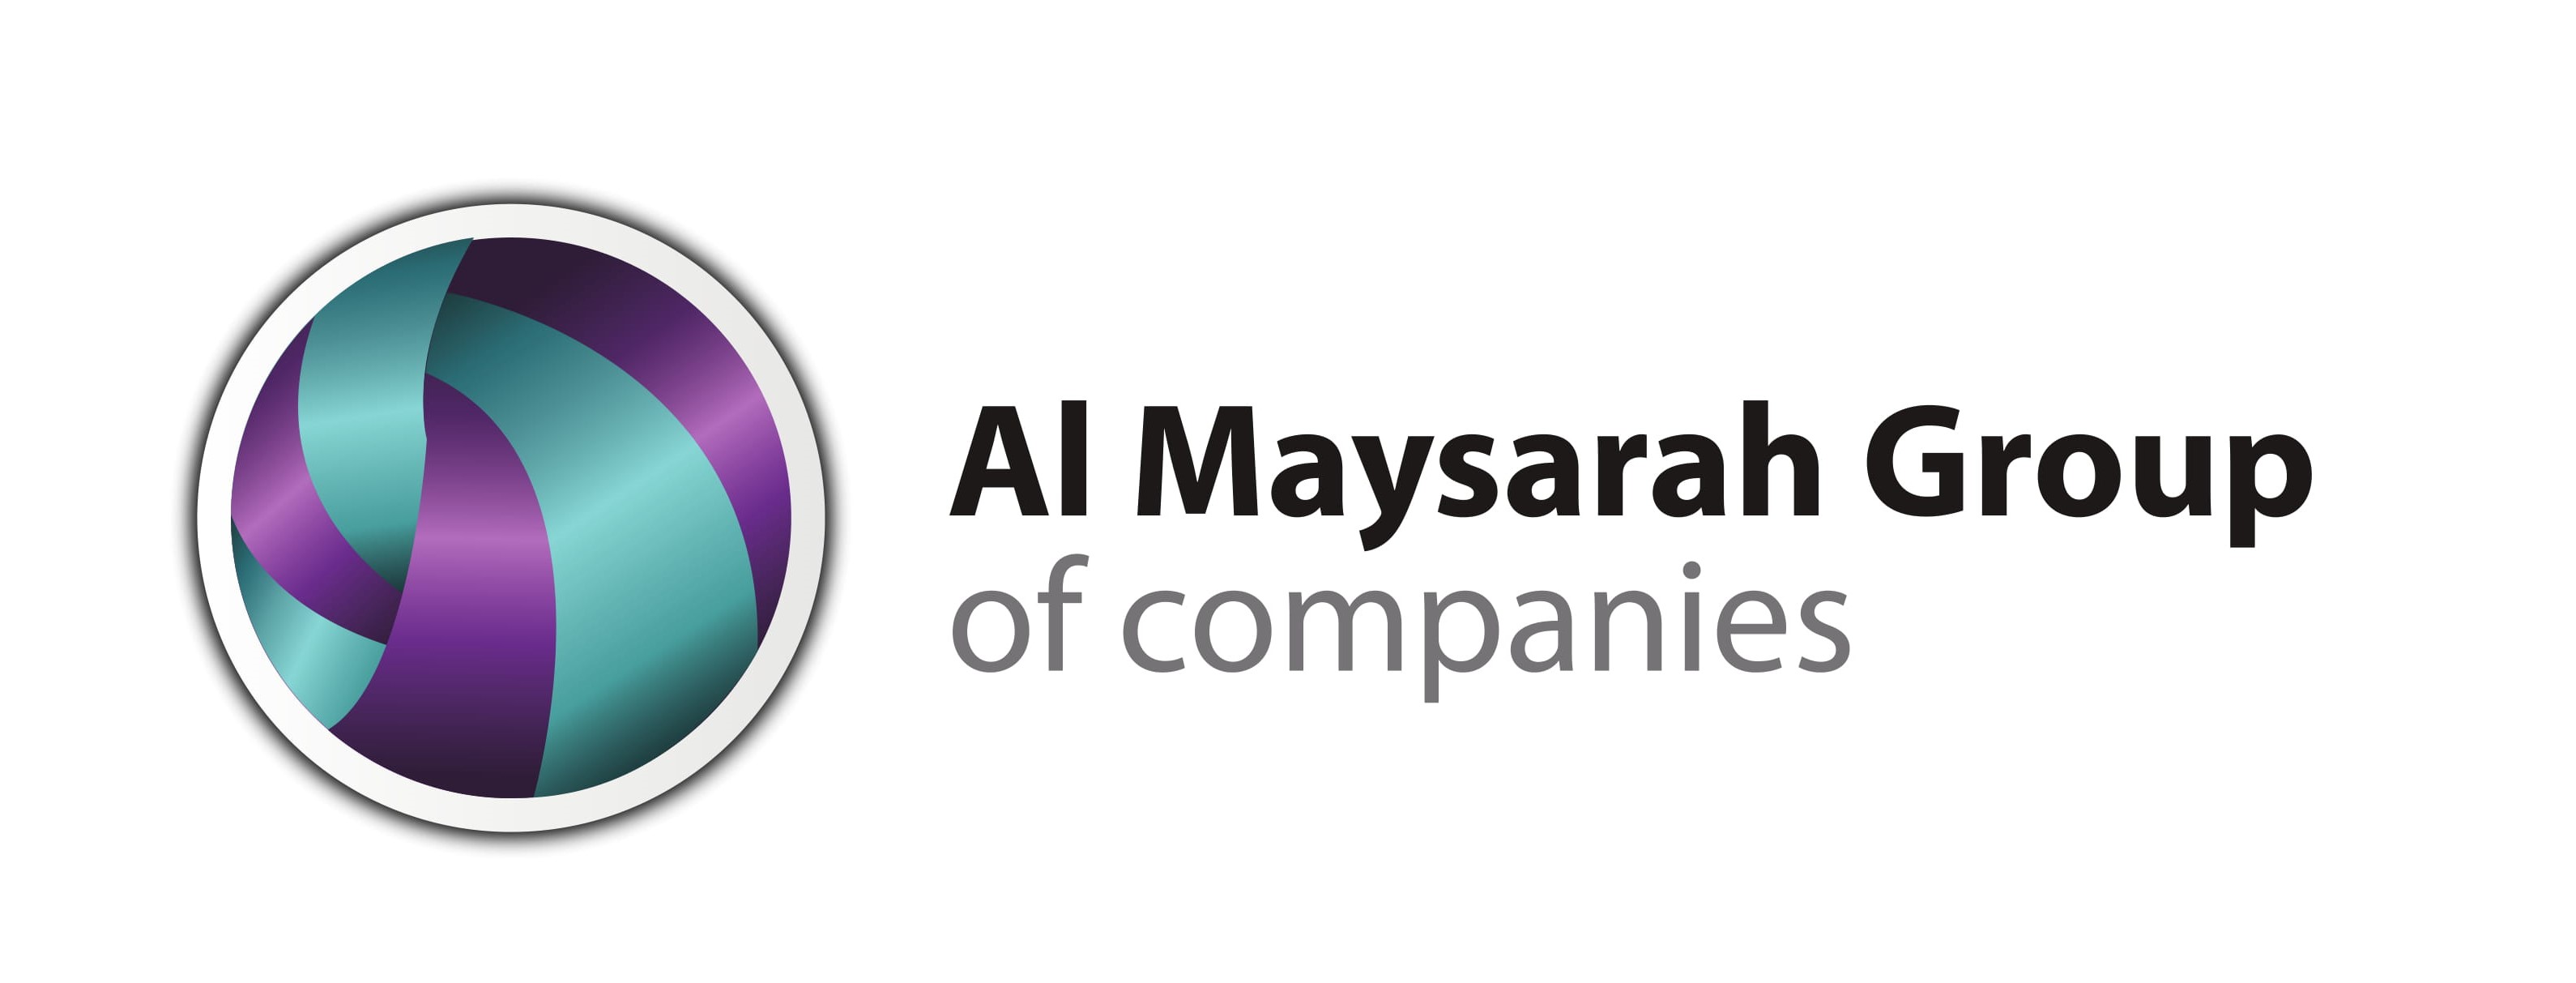 Al Maysarah Group